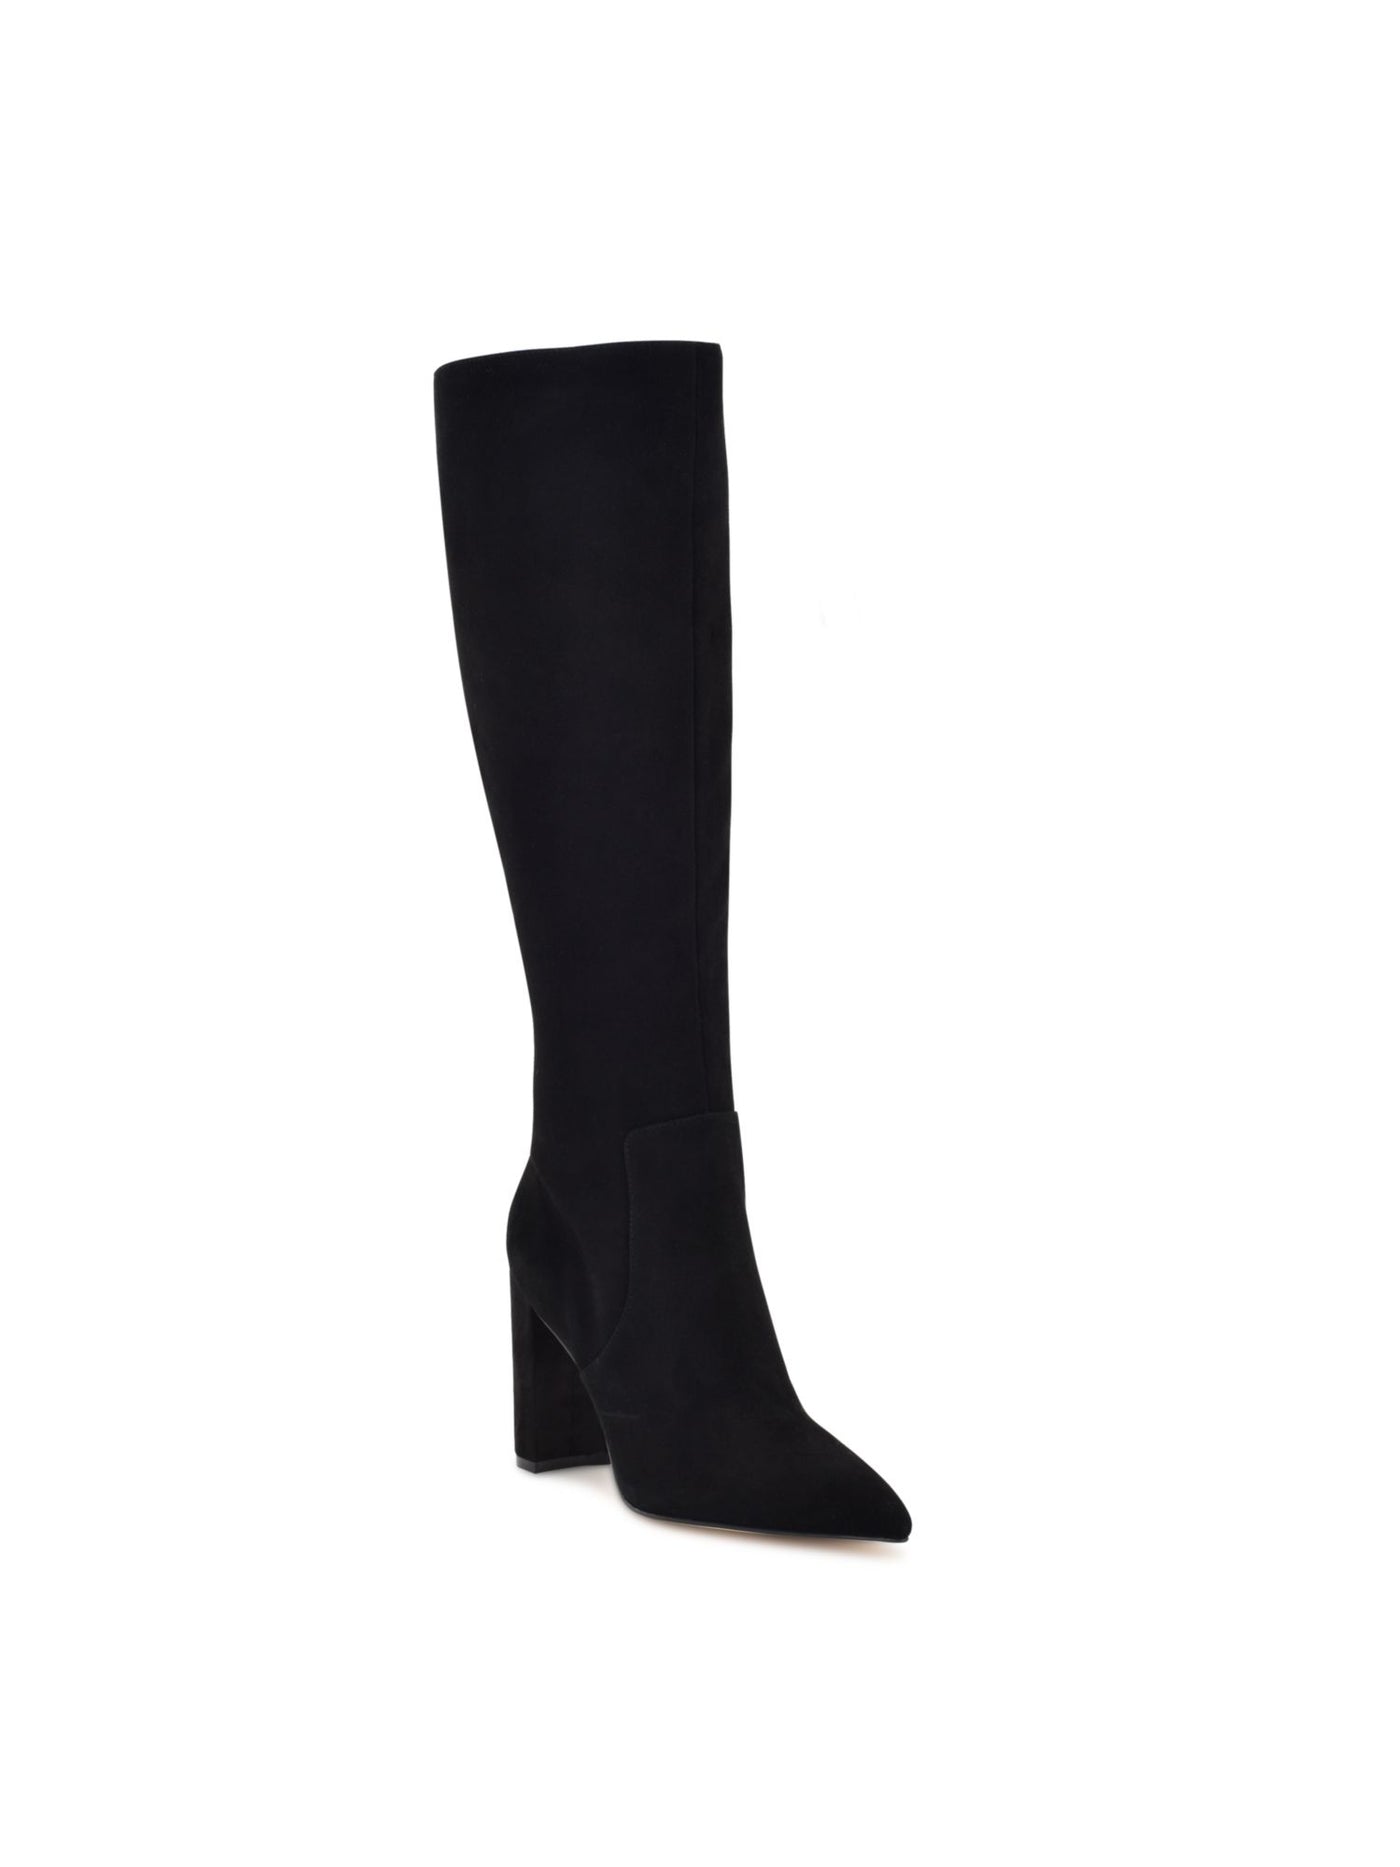 NINE WEST Womens Black Comfort Danee Pointed Toe Block Heel Zip-Up Leather Dress Boots 11 M